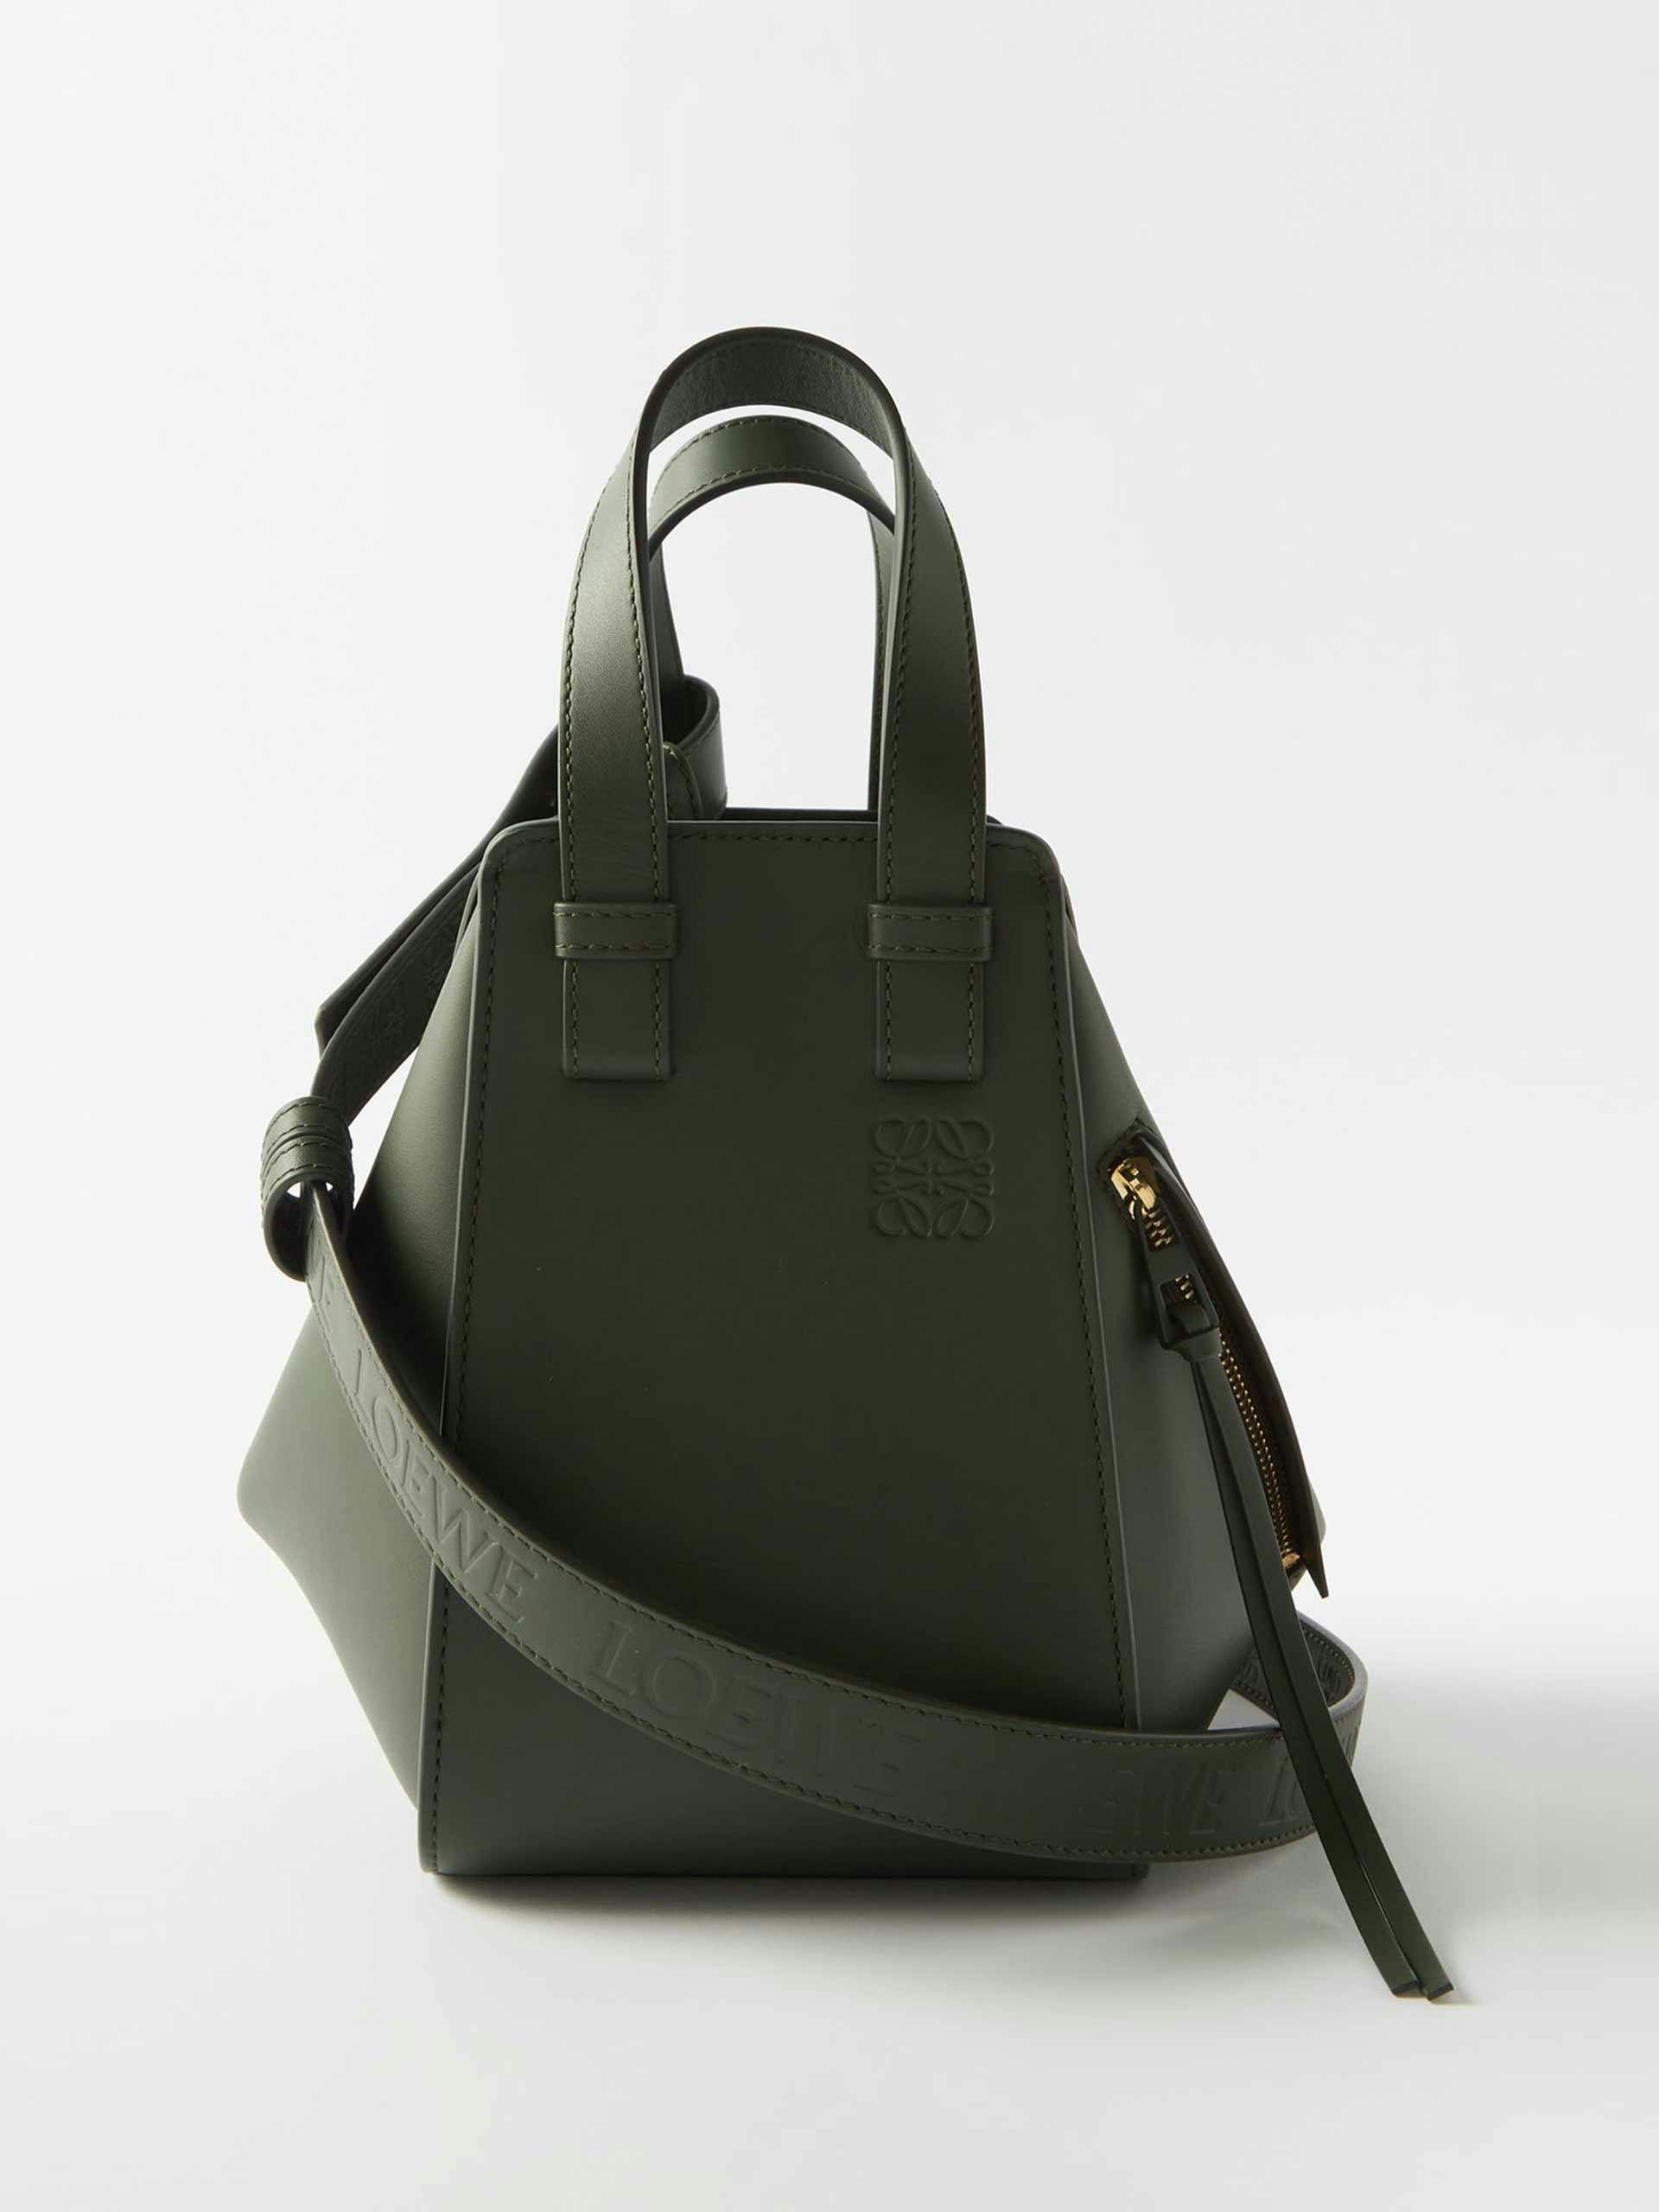 Hammock small leather handbag